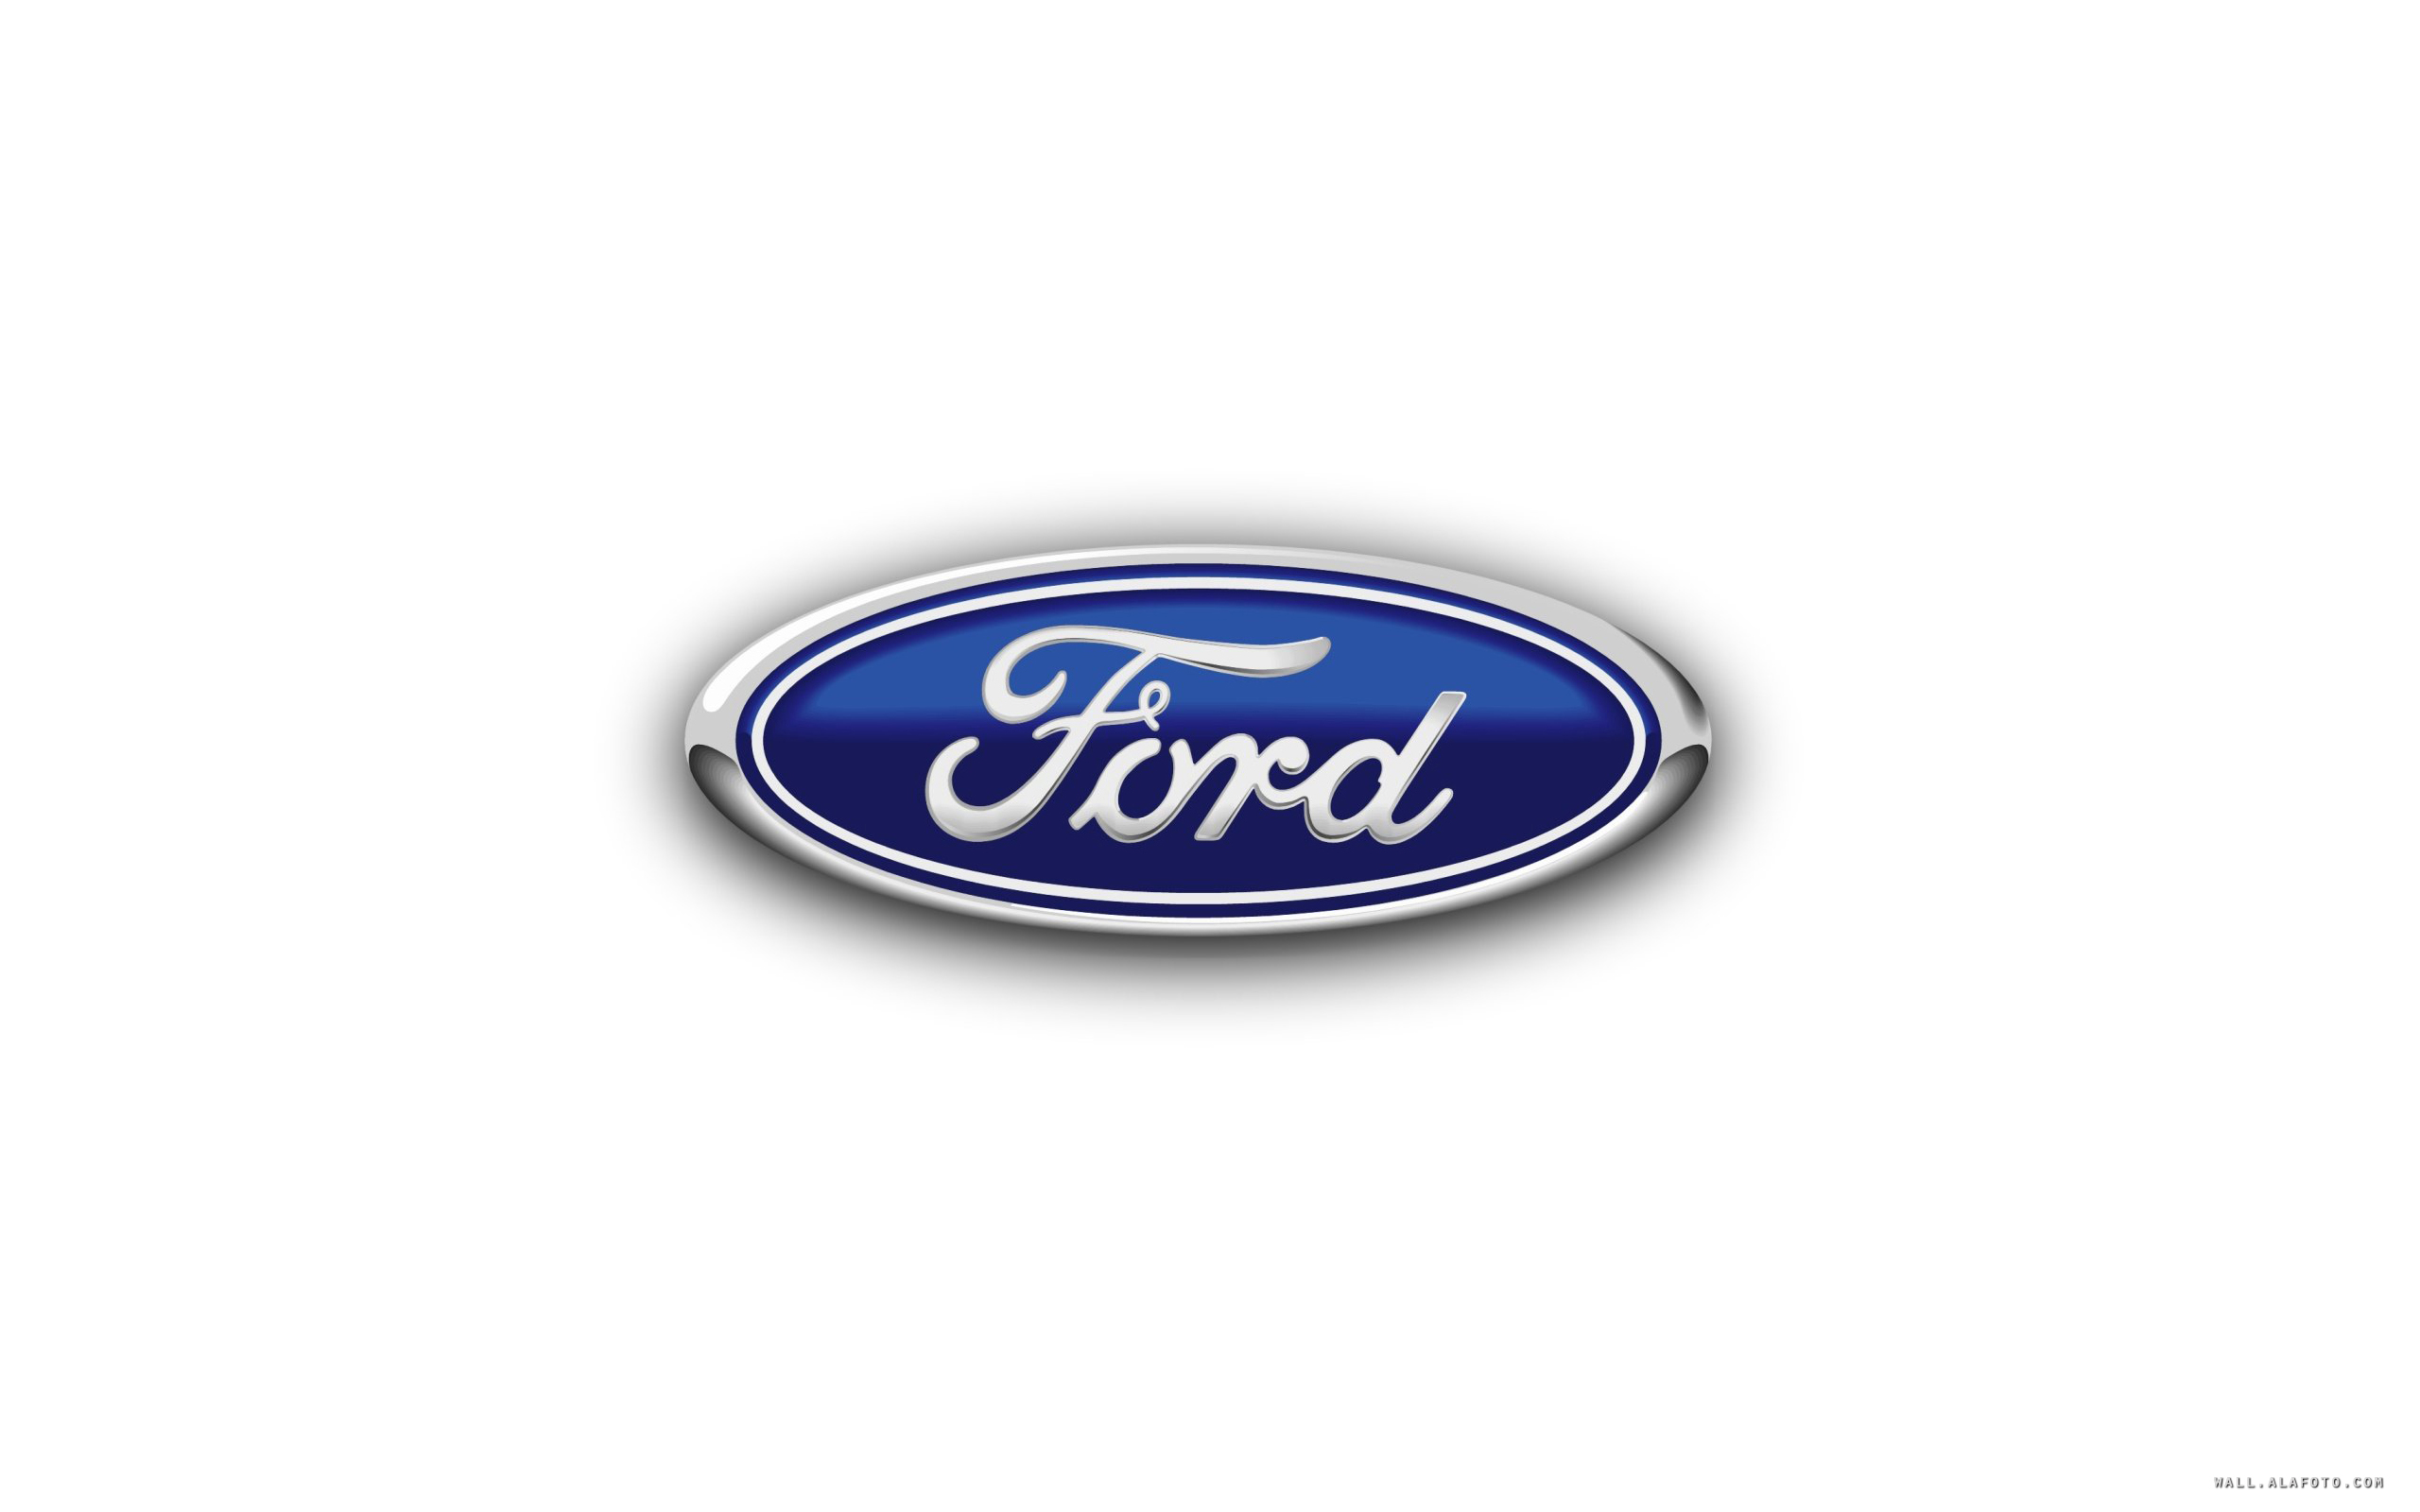 Ford Cars Logos   Ford logo 092   Alafoto Wallpapers